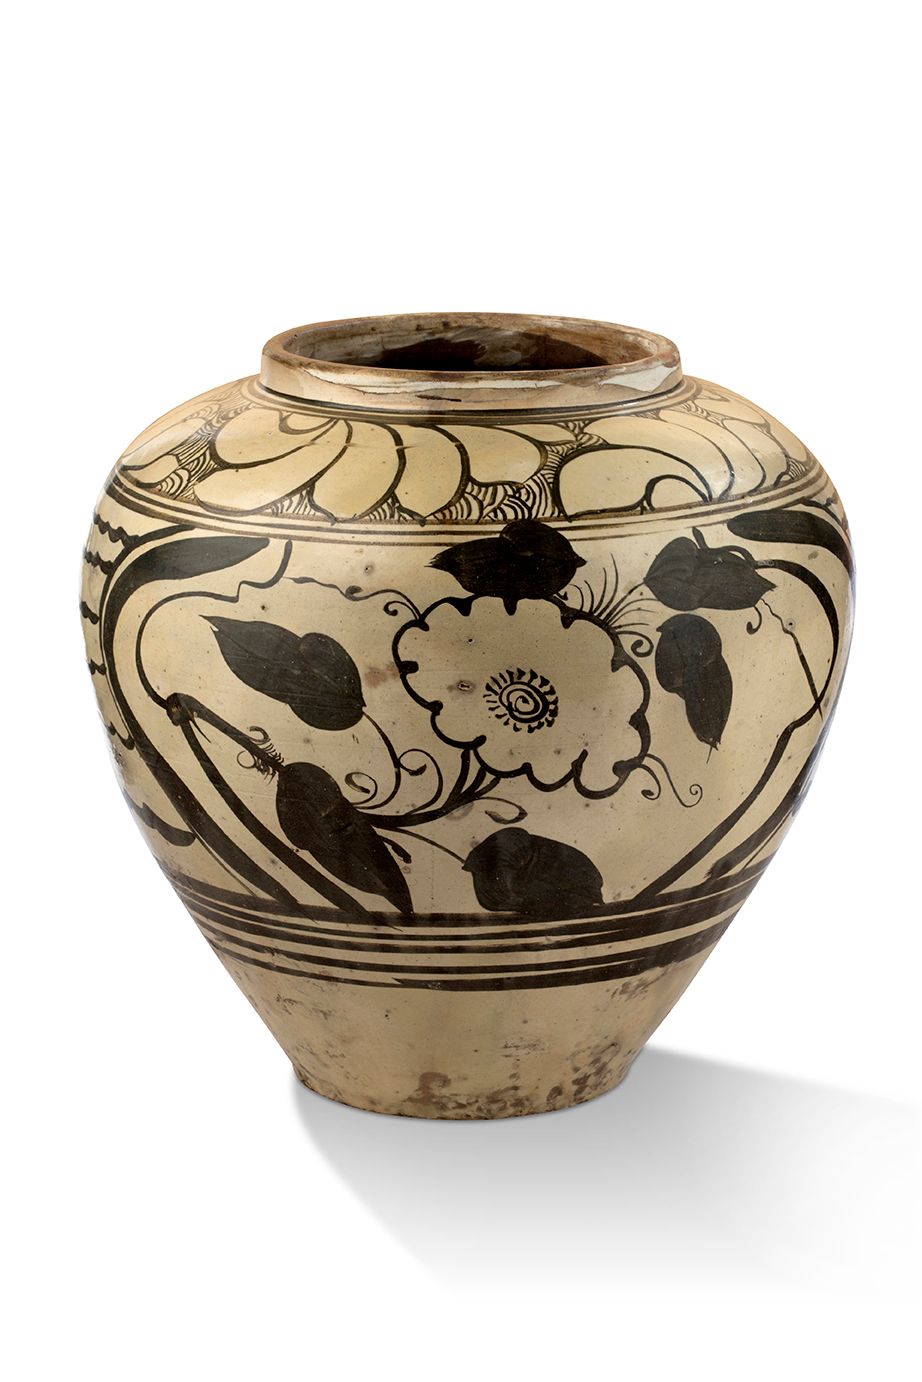 CHINE DYNASTIE YUAN (1279-1368) Important Guan jar
Enameled stoneware of the Ciz&hellip;